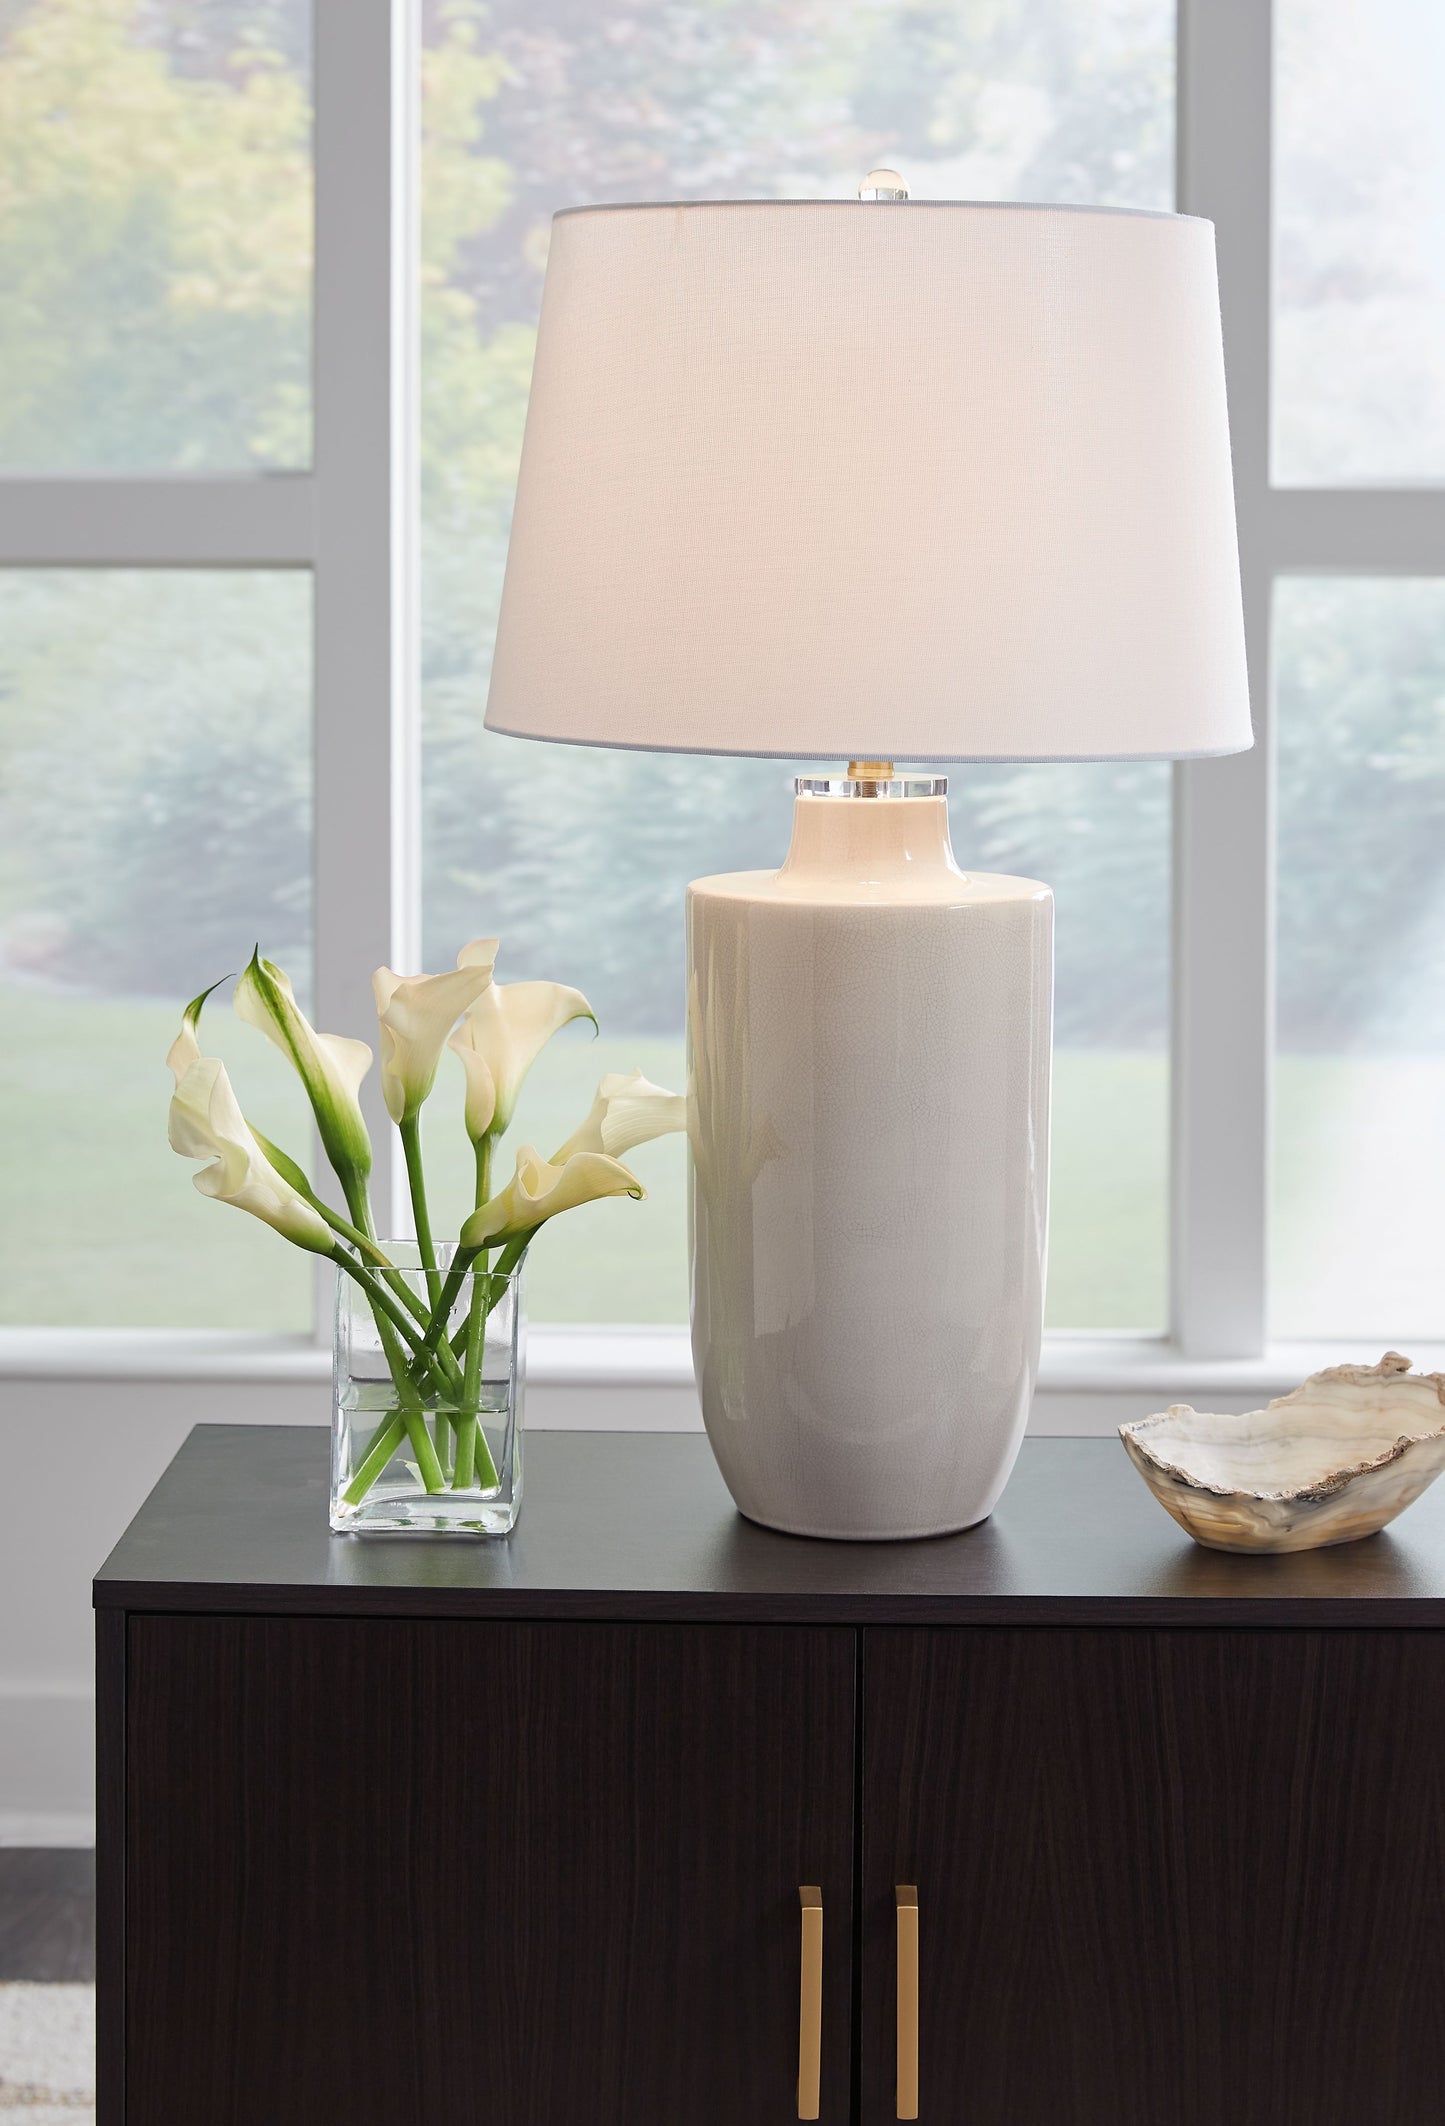 Cylener - Off White - Ceramic Table Lamp